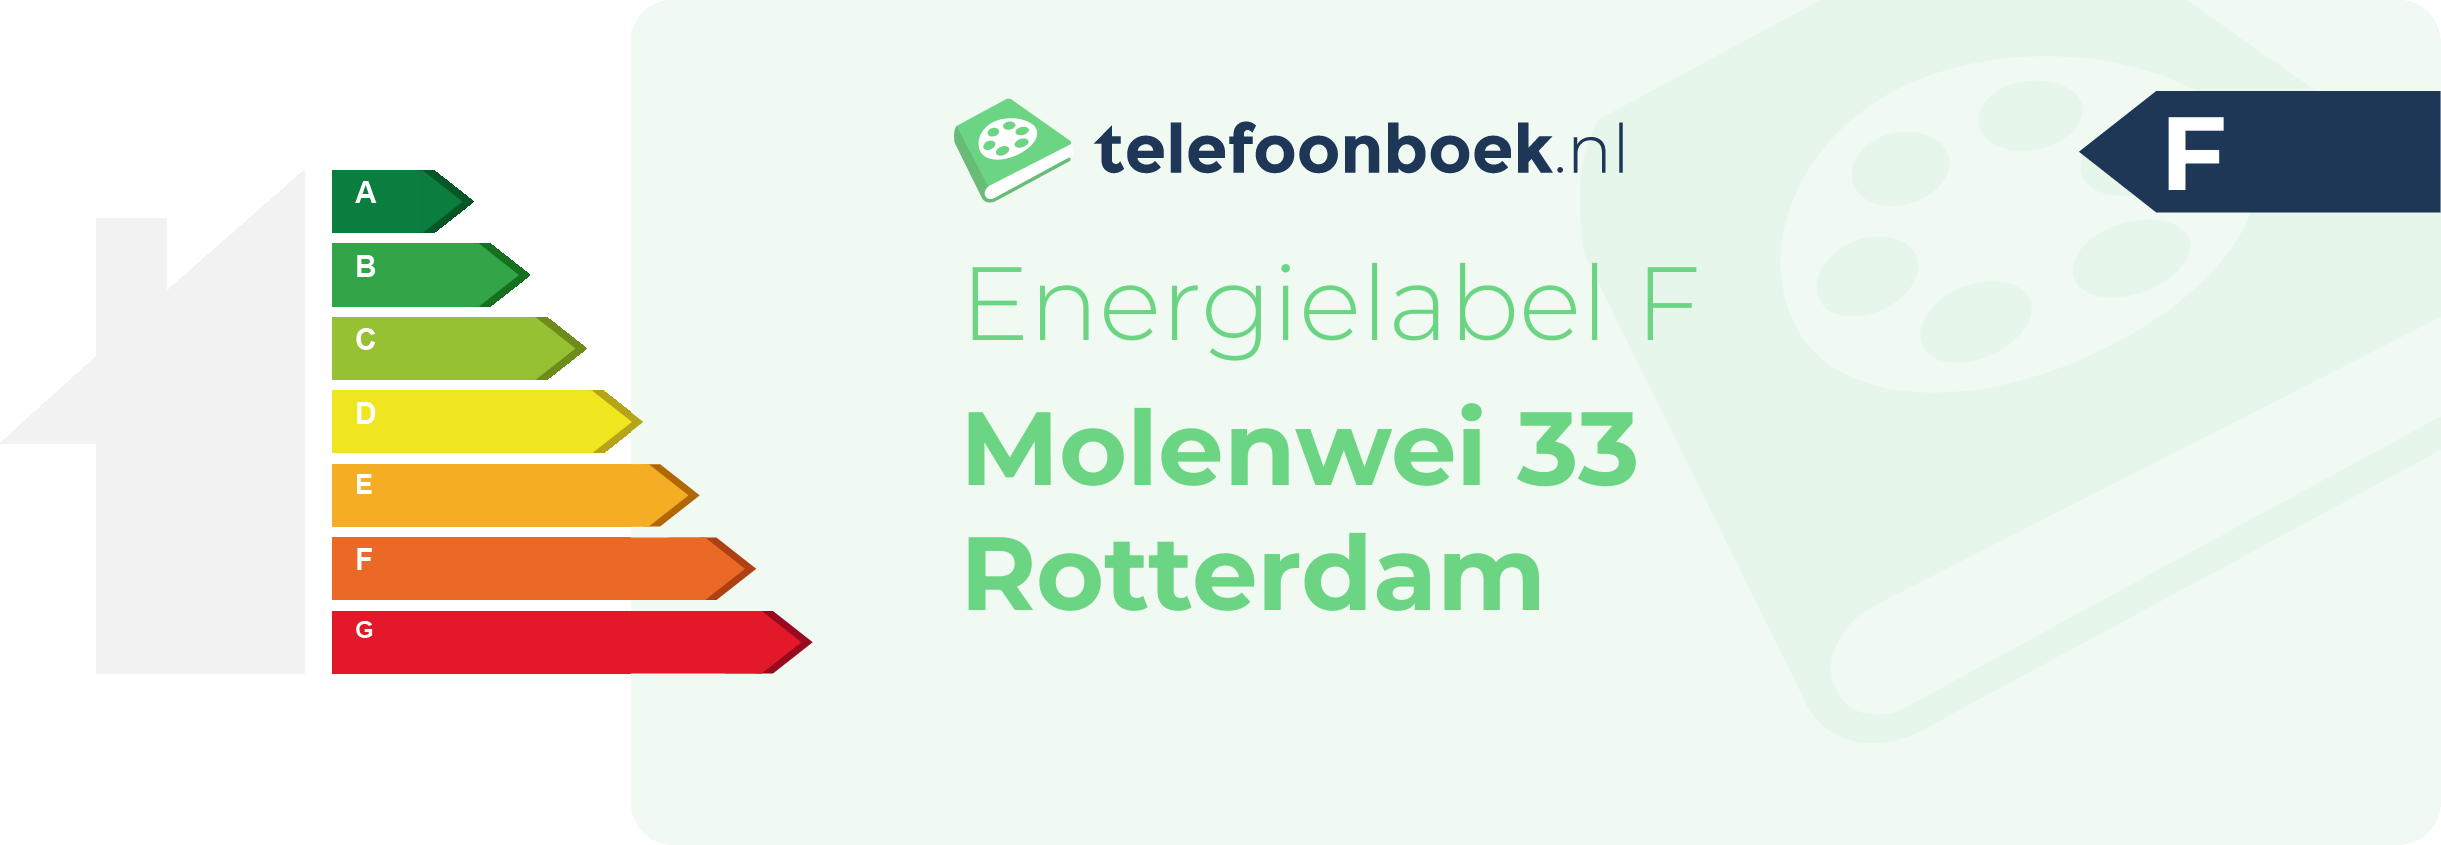 Energielabel Molenwei 33 Rotterdam